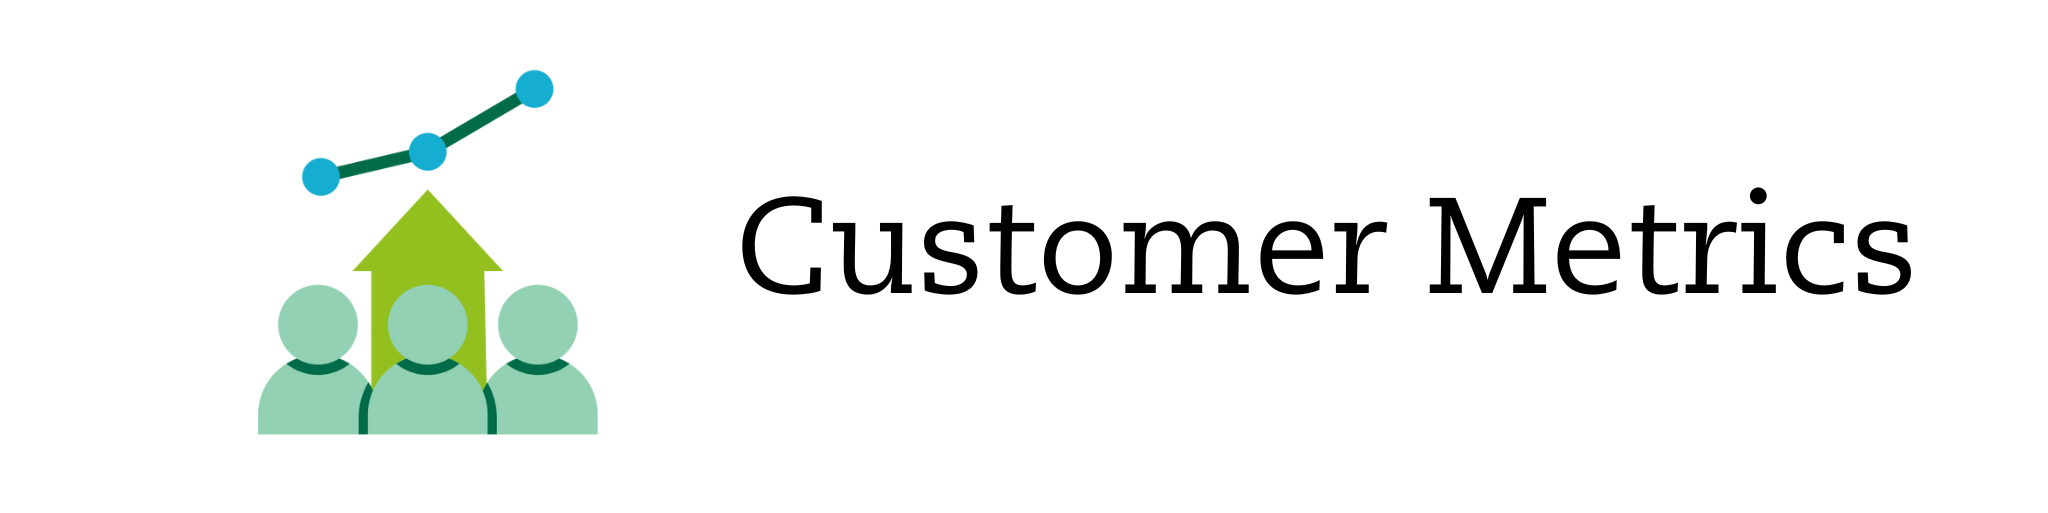 Customer Metrics - Banner